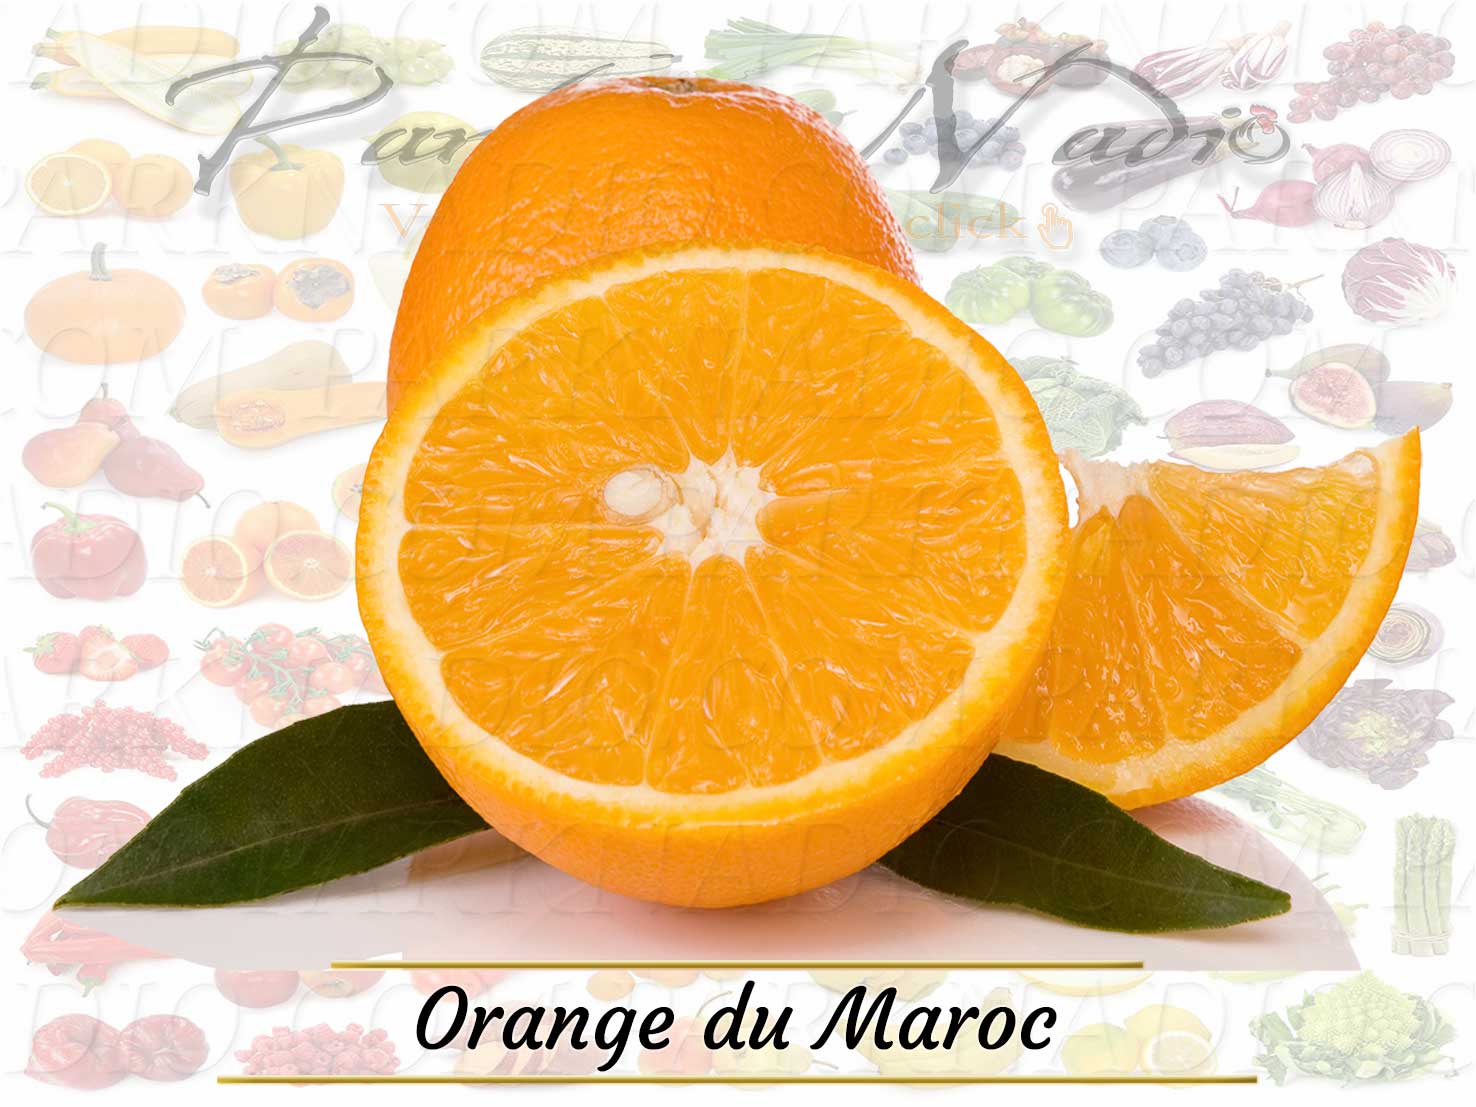 Orange du maroc